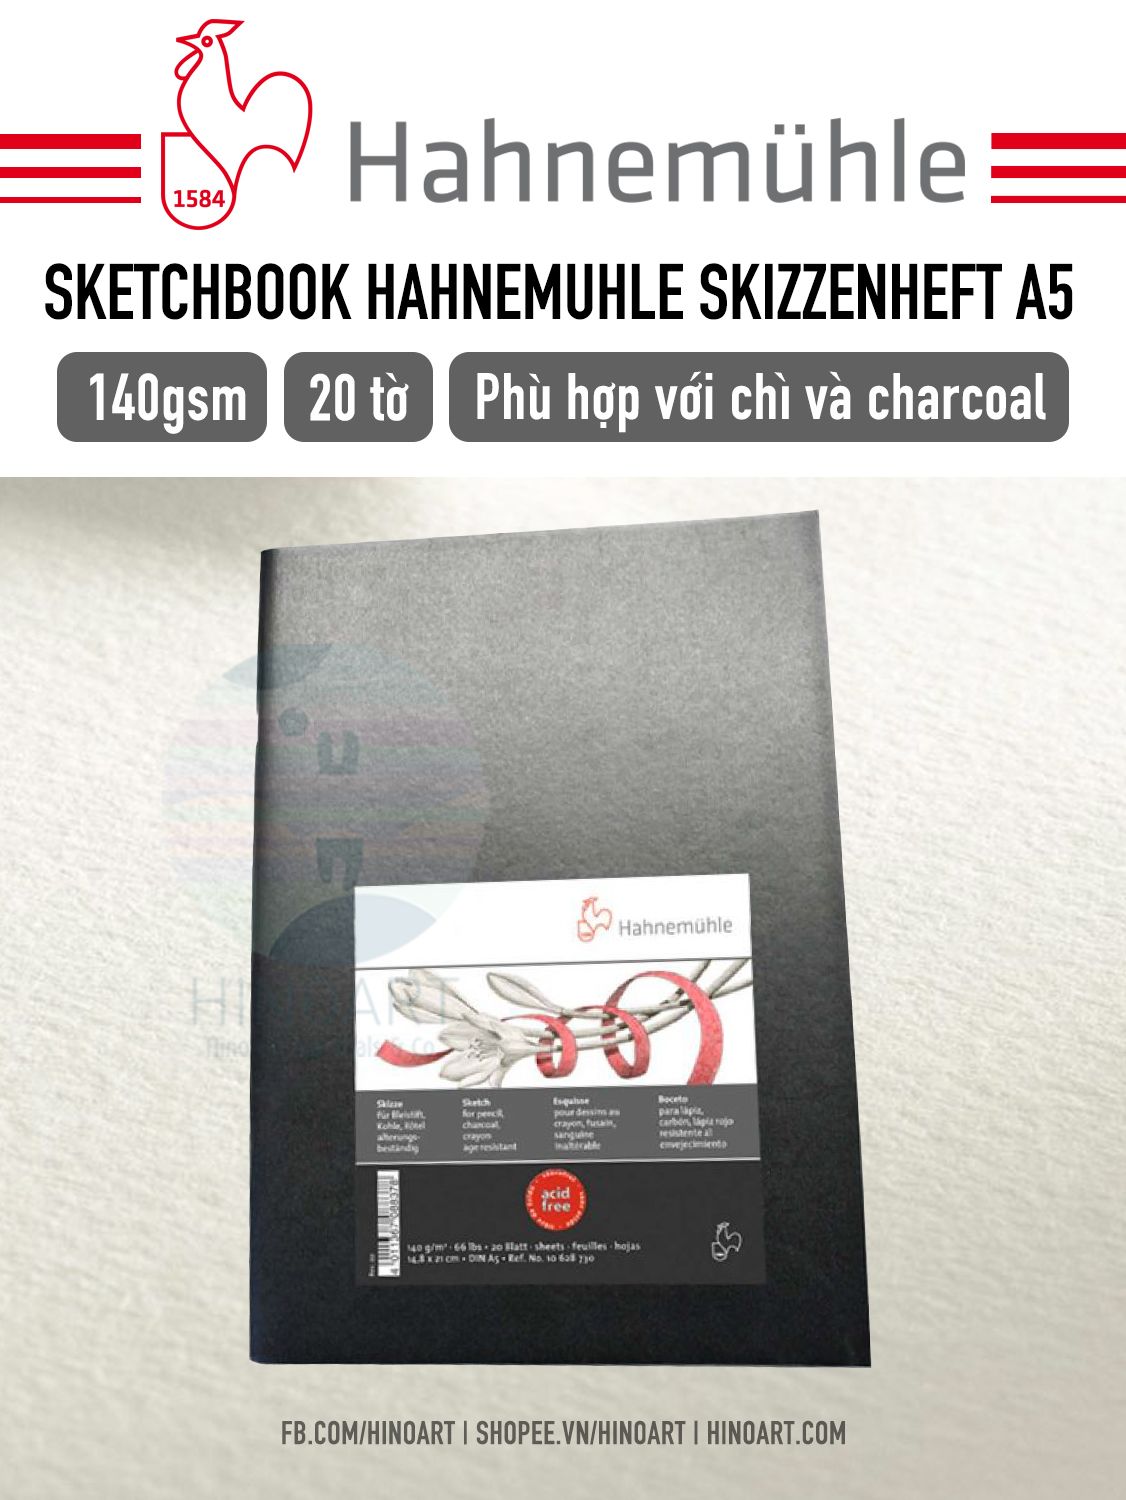 Sketchbook Hahnemuhle Skizzenheft A5